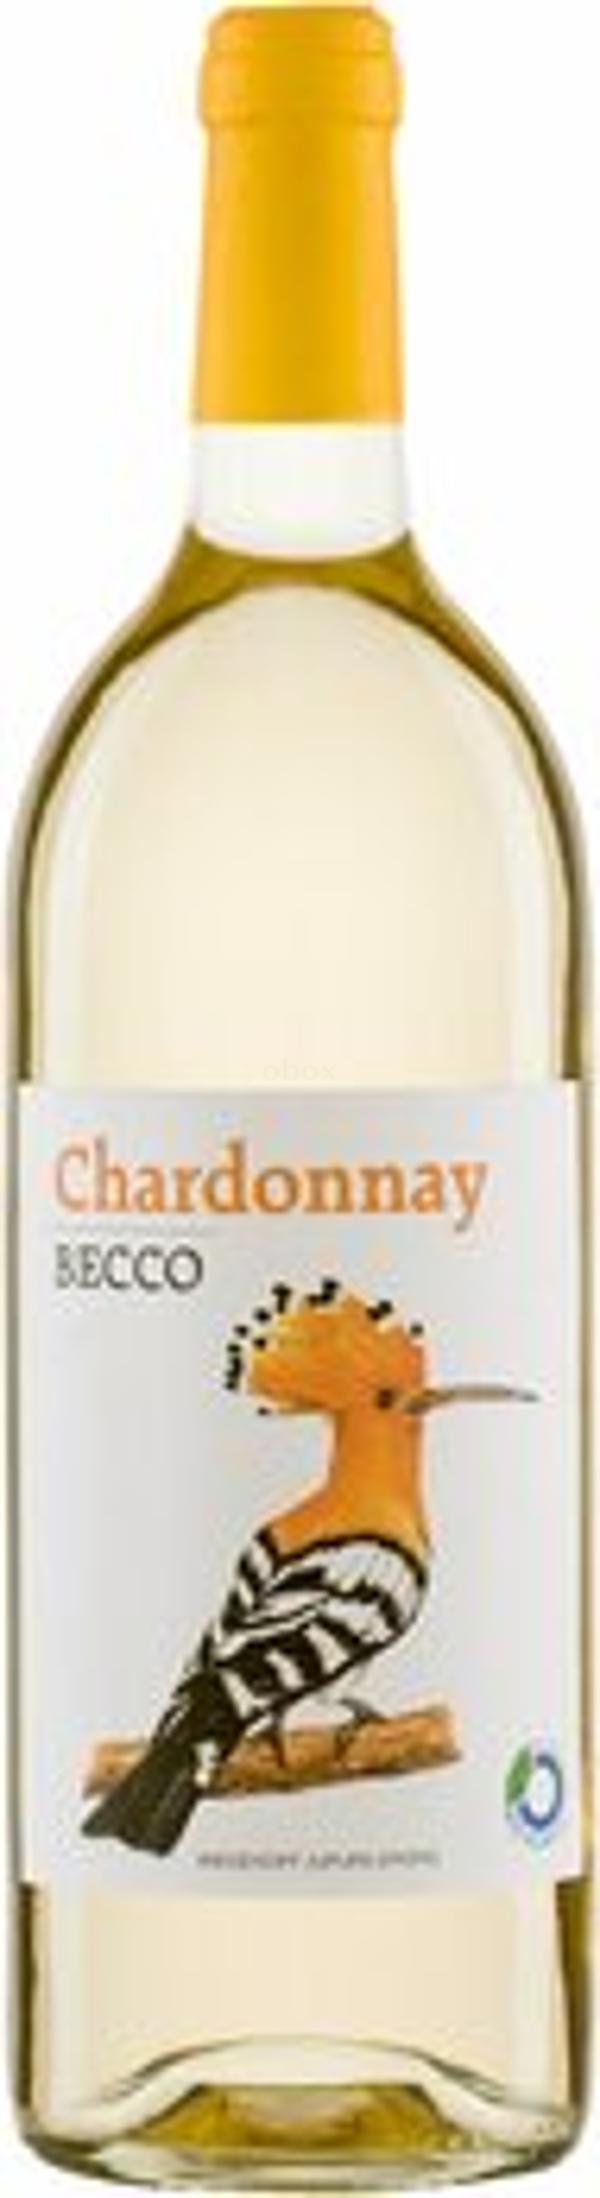 Produktfoto zu BECCO Chardonnay 1l